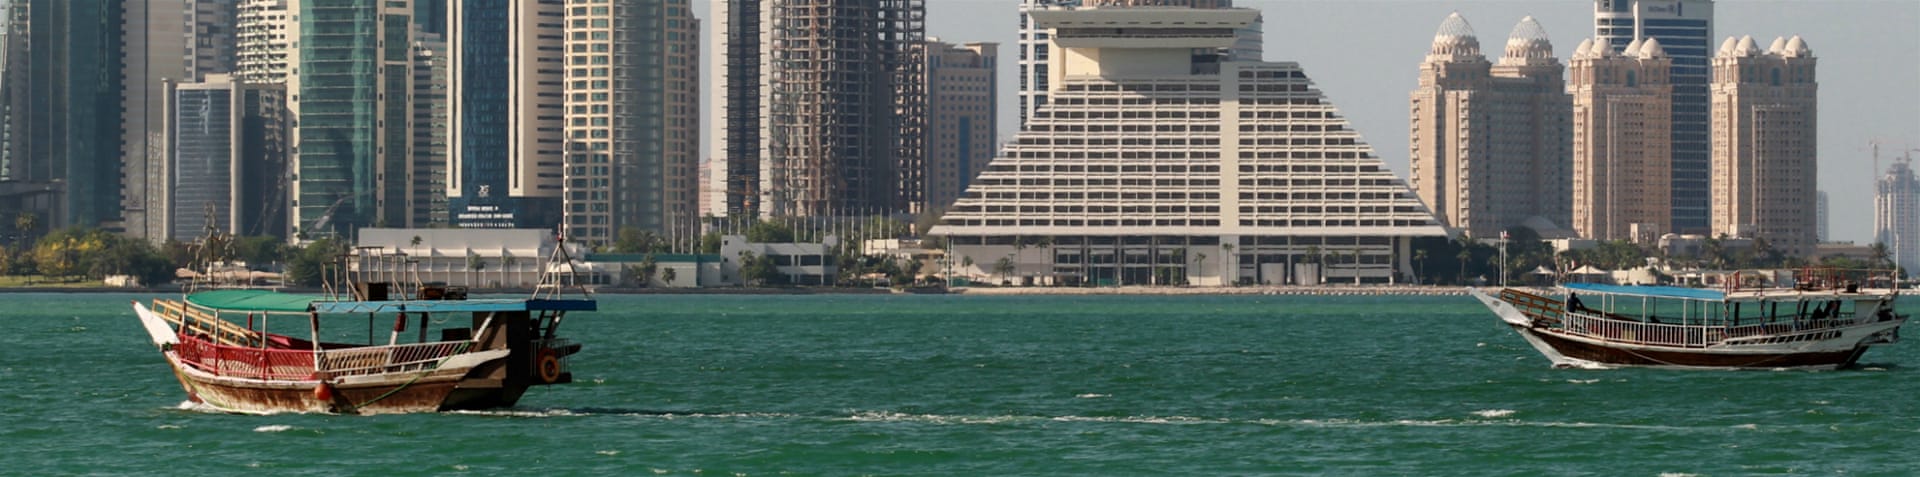 UAE's Anwar Gargash said an economic embargo could be imposed against Qatar [File: Faisal Al Nasser/Reuters]